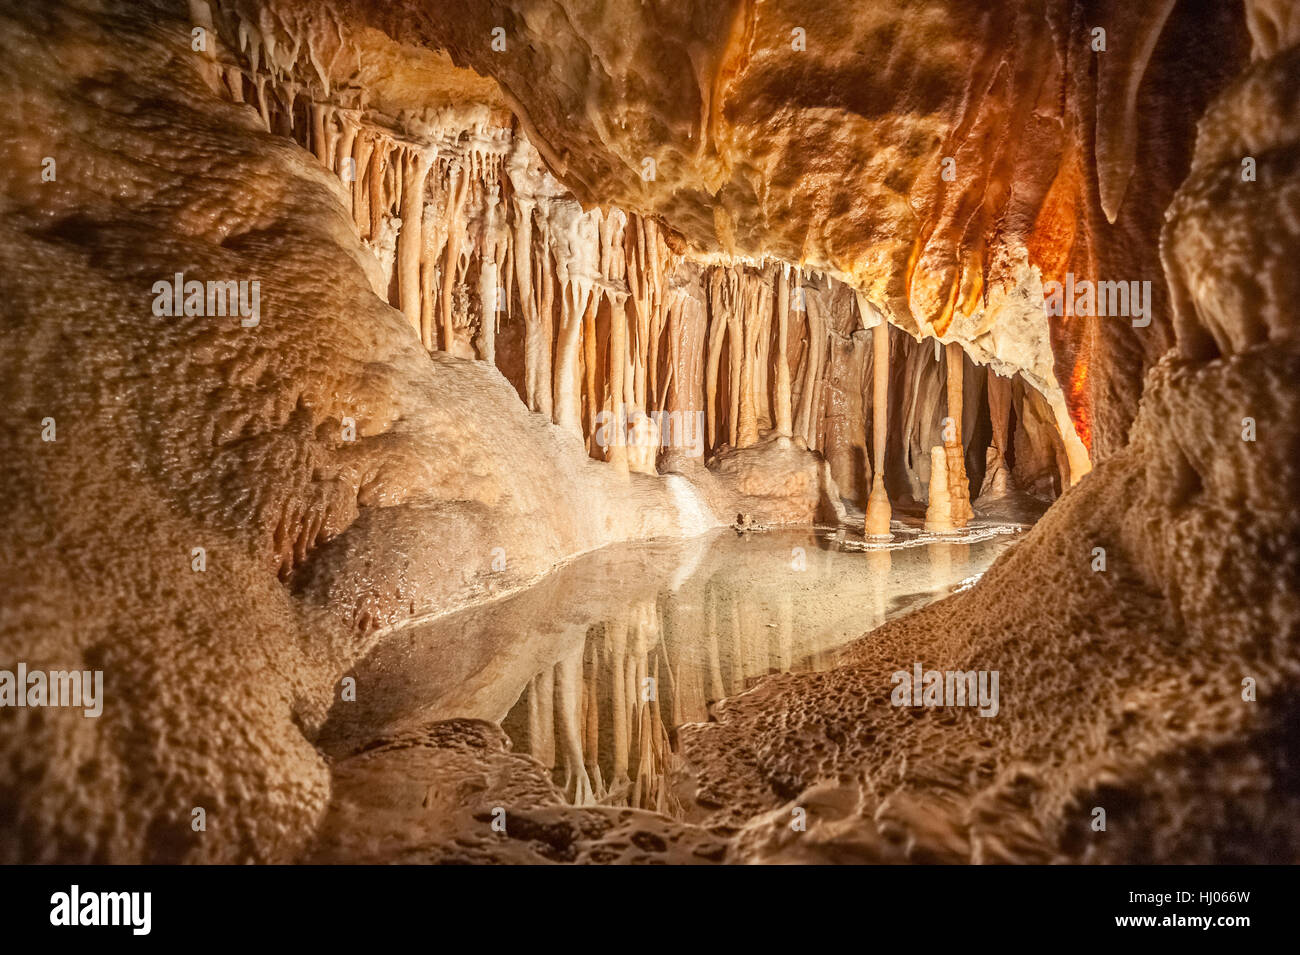 Yarrangobilly Caves in Kosciuszko National Park, located in New South Wales, Australia Stock Photo